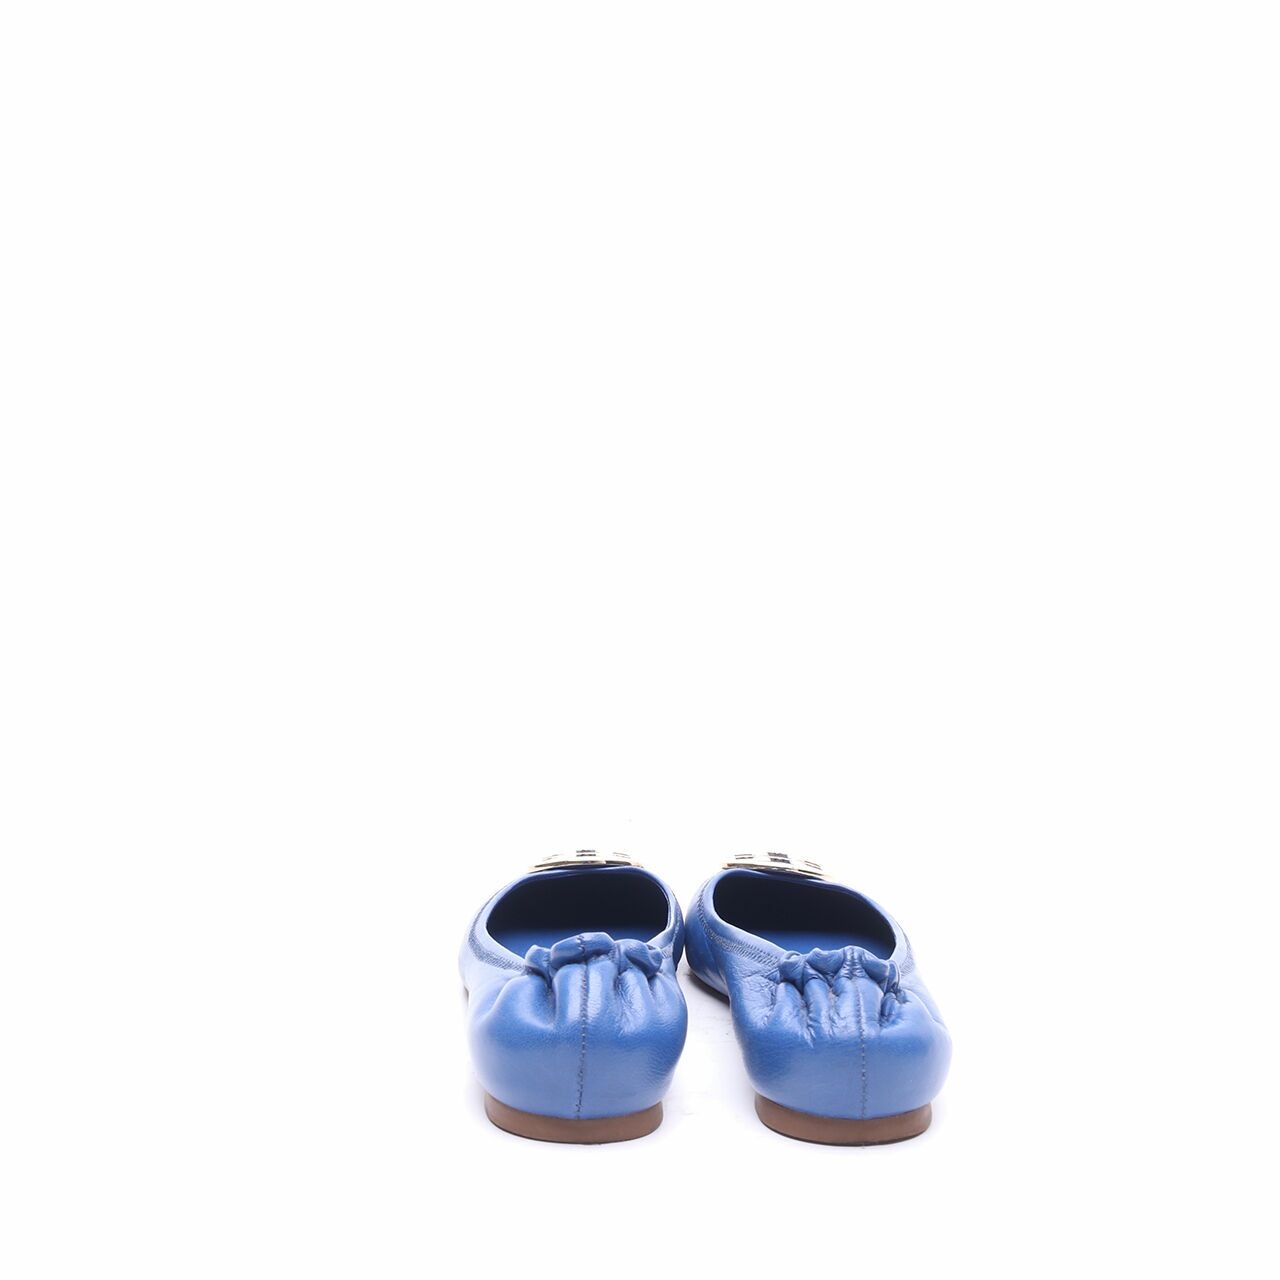 Tory Burch Reva Blue Flats Shoes